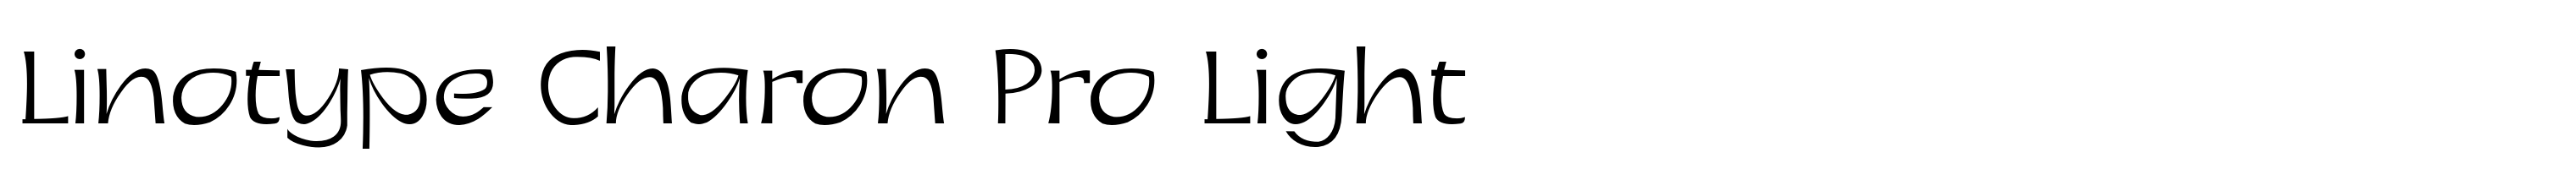 Linotype Charon Pro Light